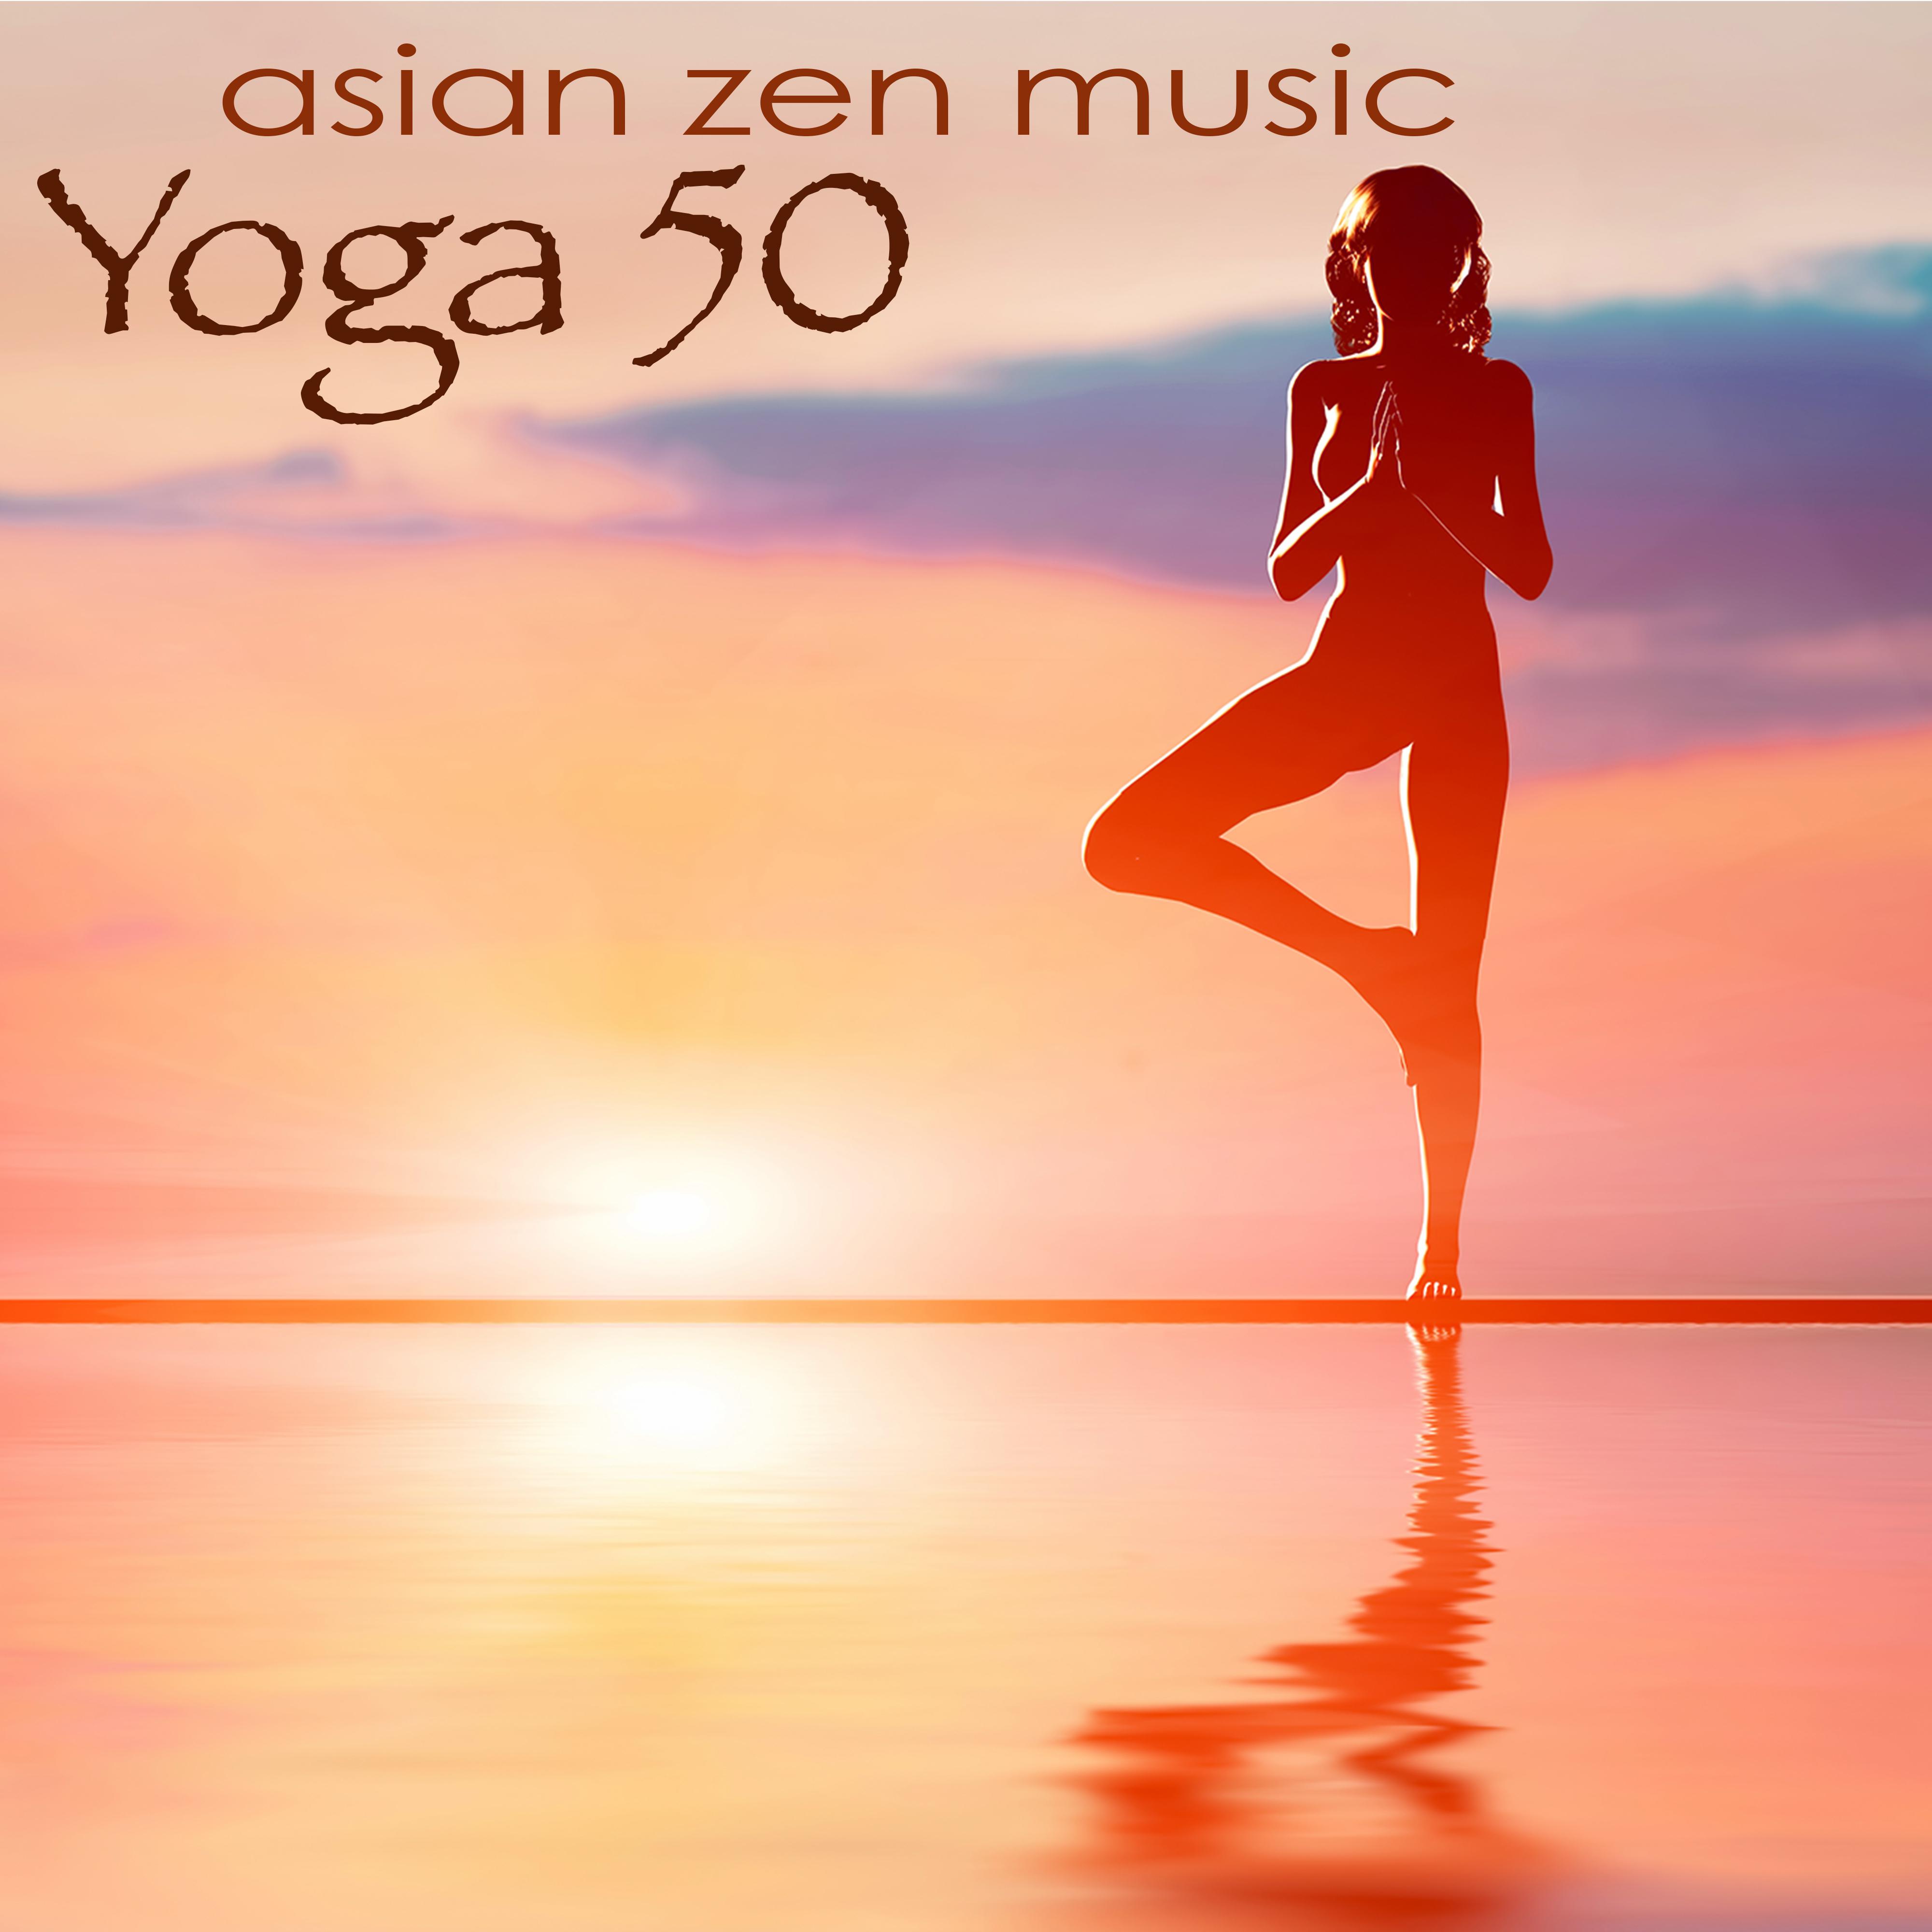 Yoga 50 Asian Zen Music – Ambient & Chillout for Meditation, Pranayama, Ashtanga, Vinyasa, Hatha & Restorative Yoga